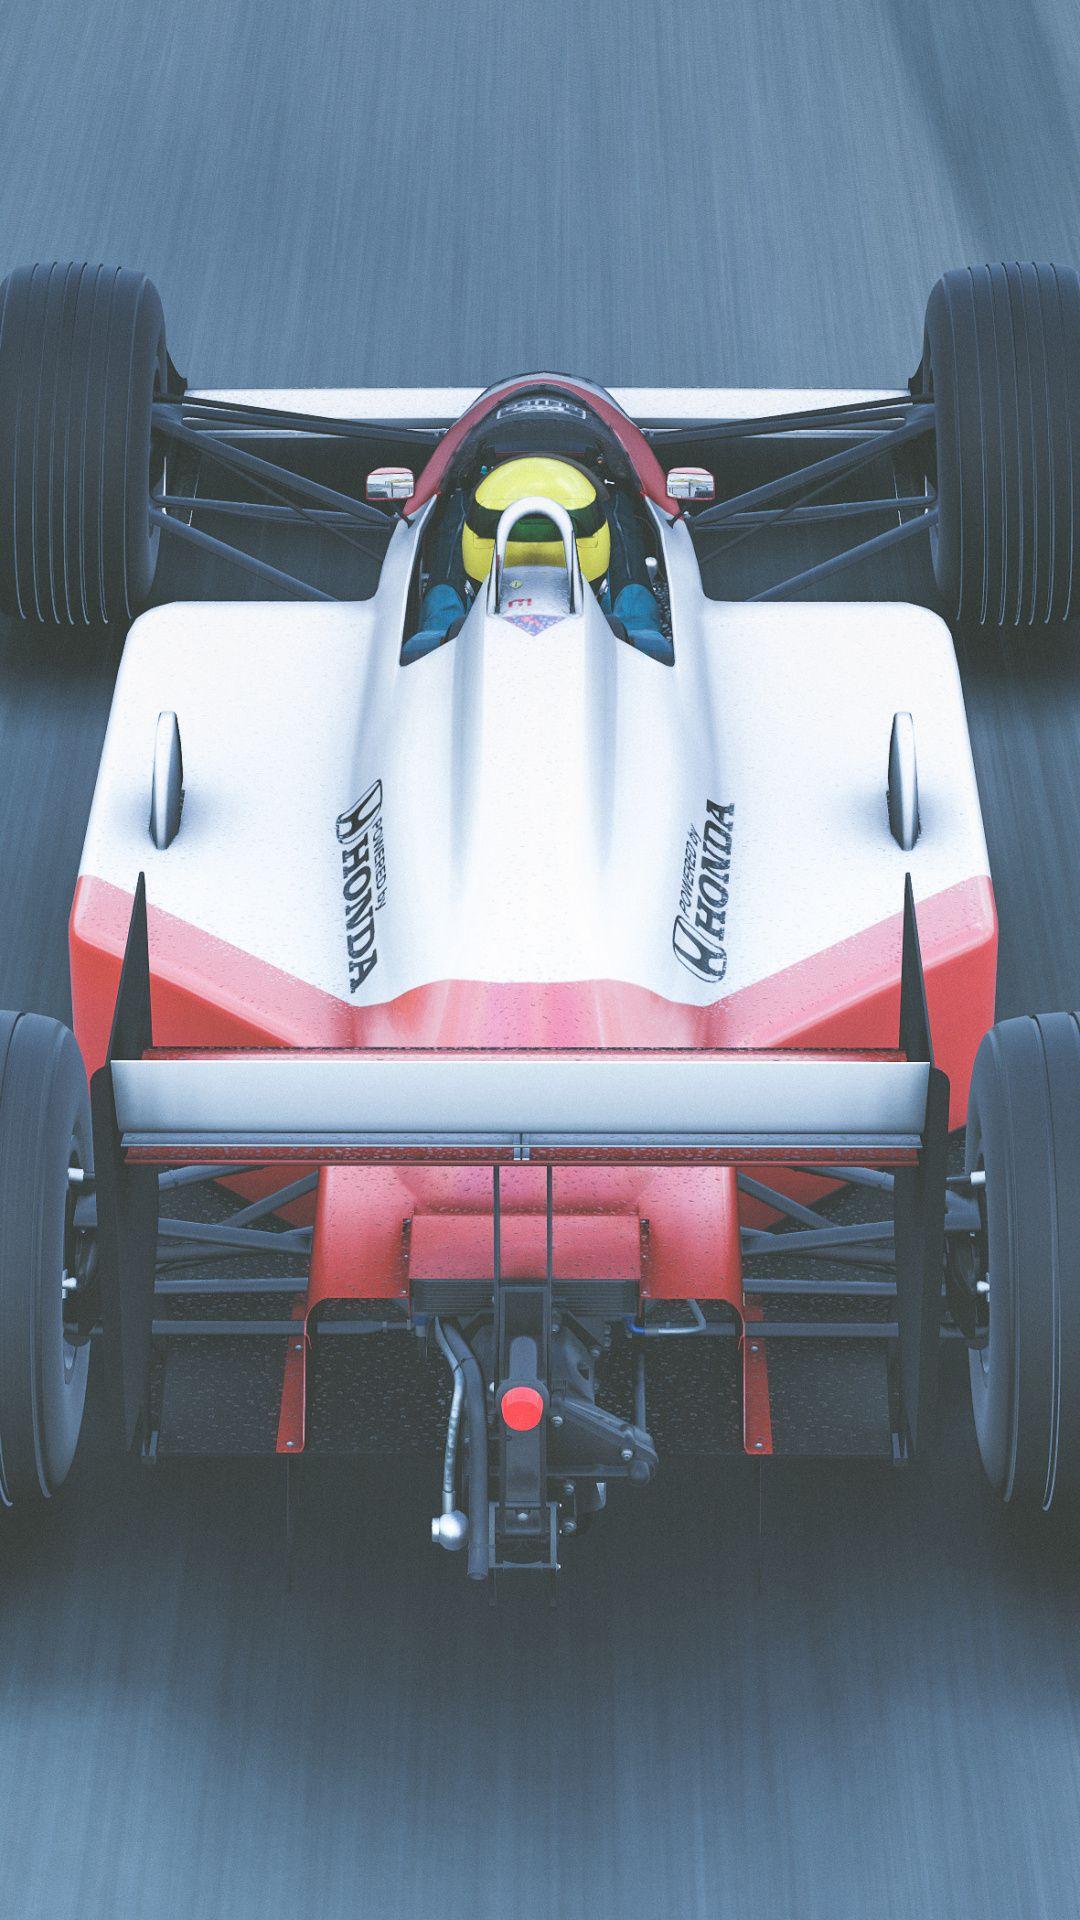 Video game, F1 race car, McLaren, 1080x1920 wallpaper. Video